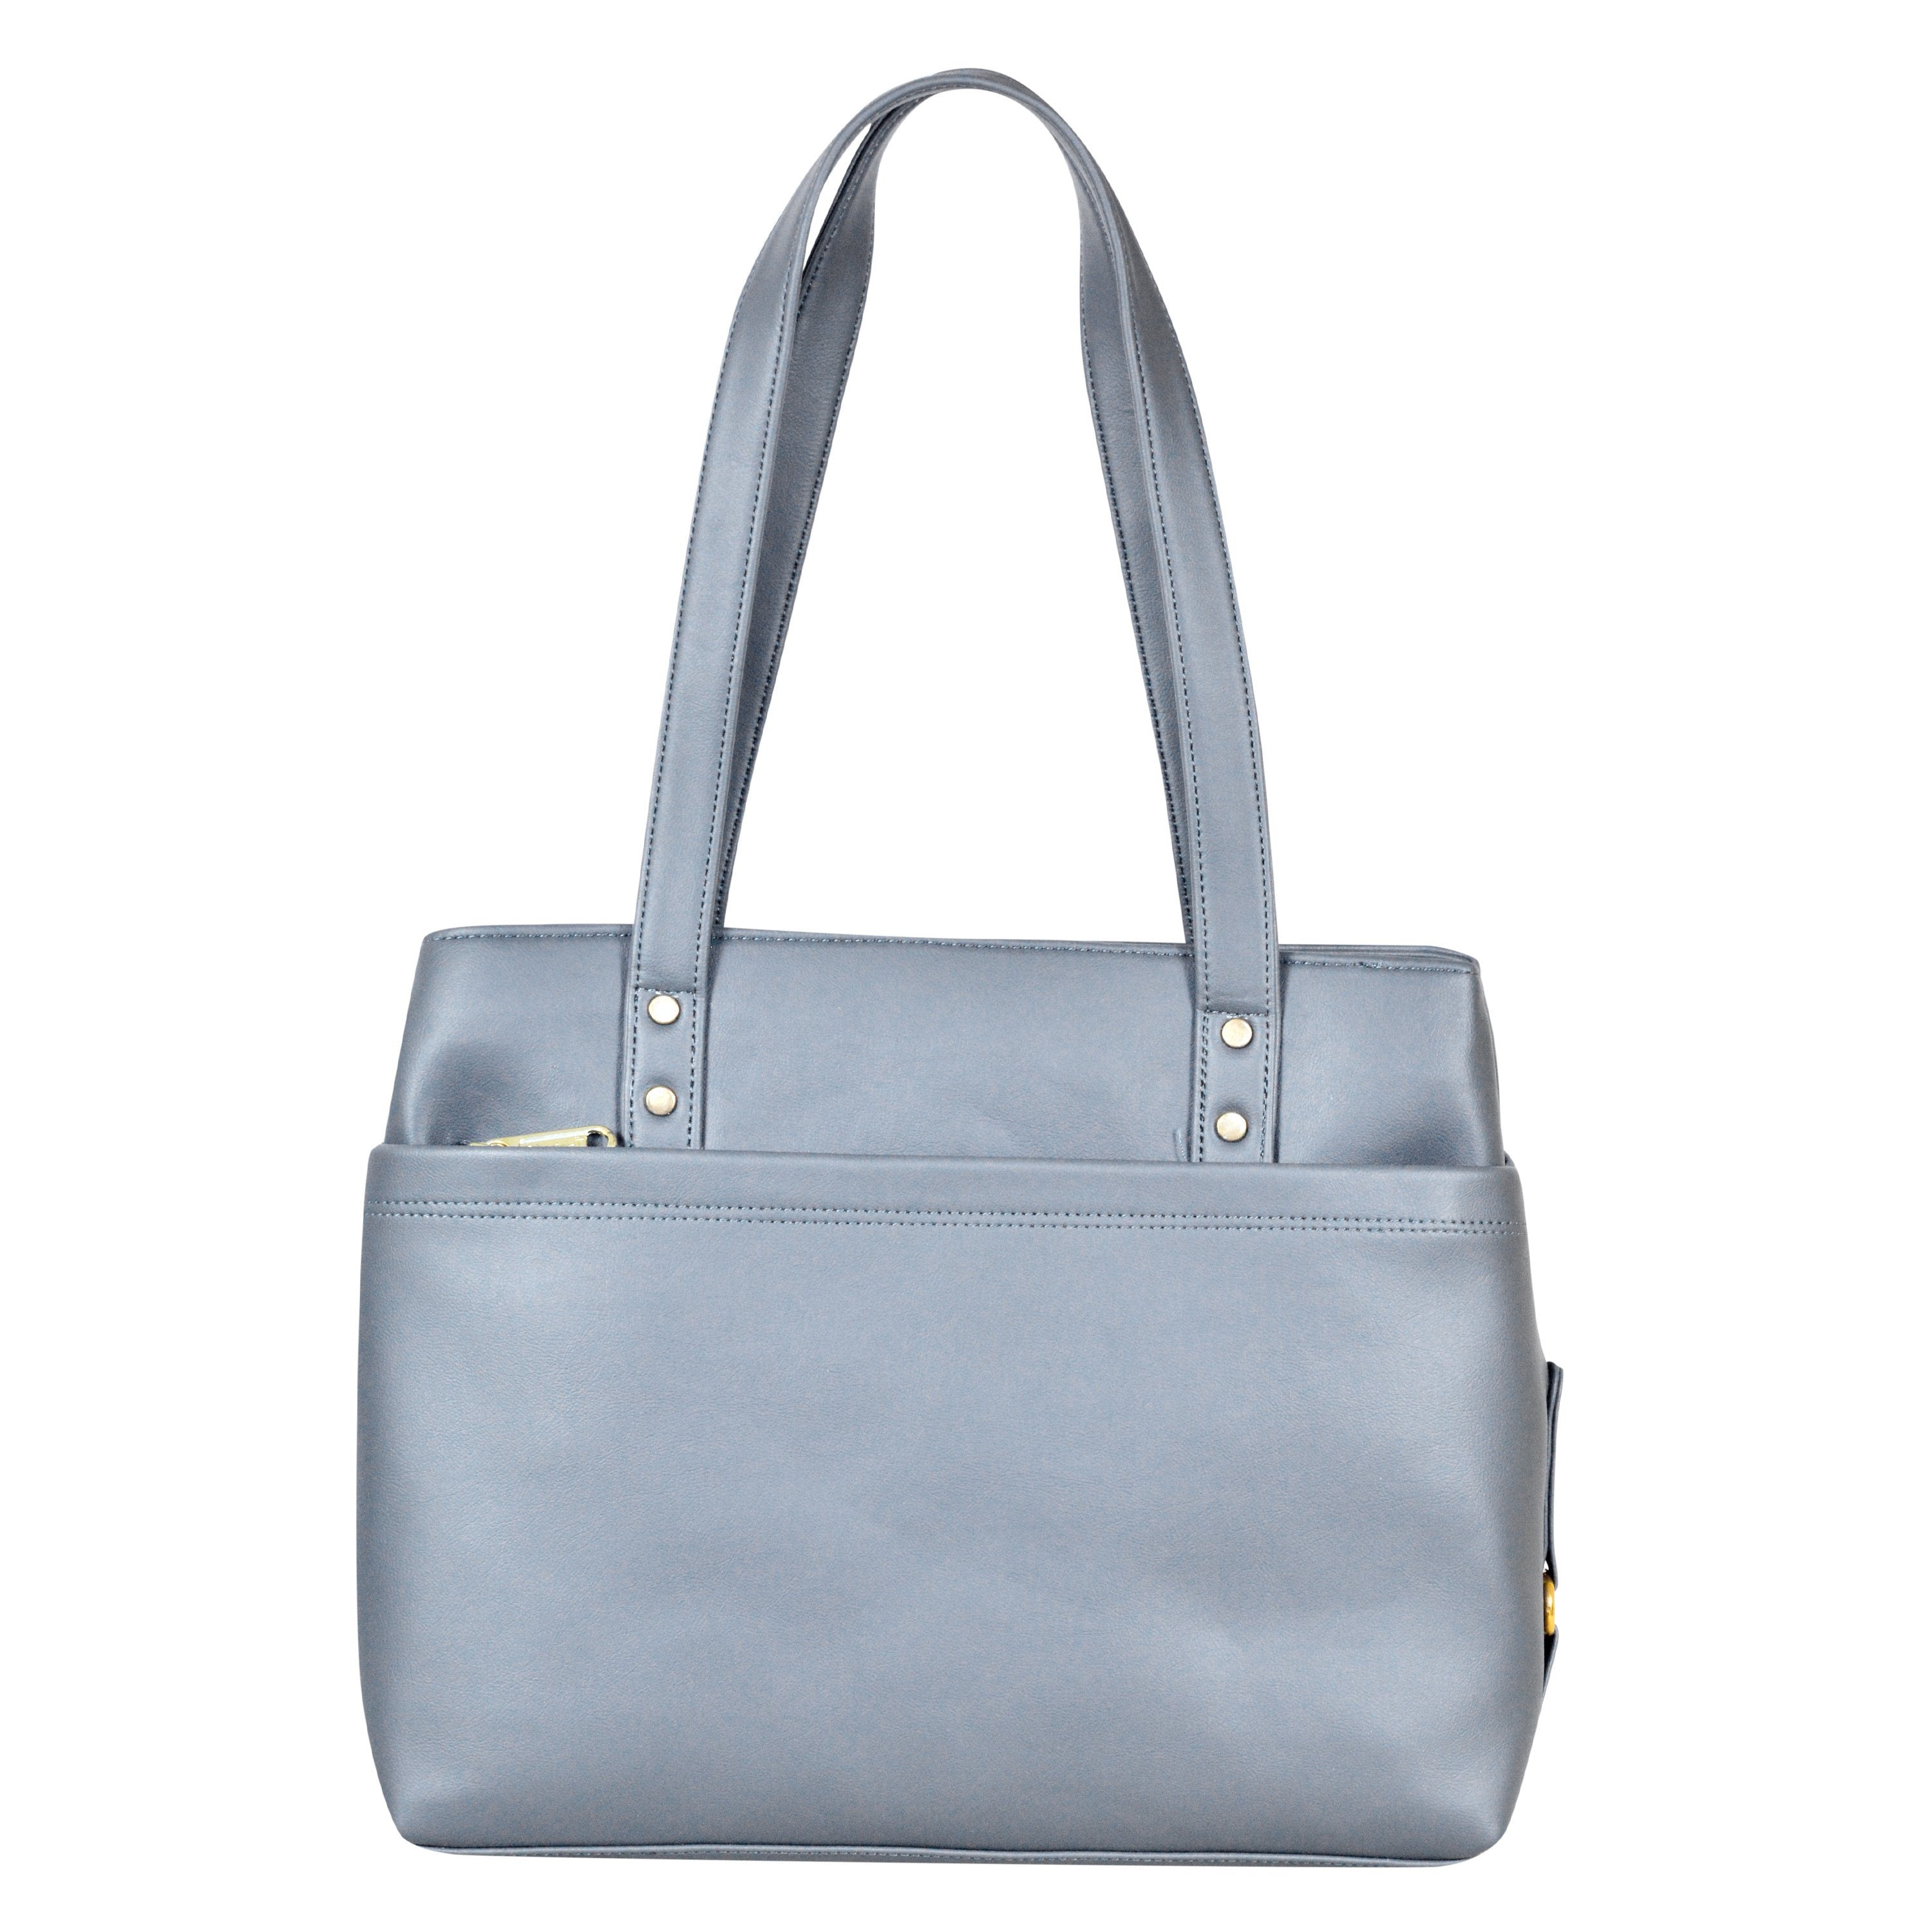 Case Bag For IPAD 10.2 Inch Bag Pouch Cover Zipper Handbag Sleeve For Apple  I | eBay